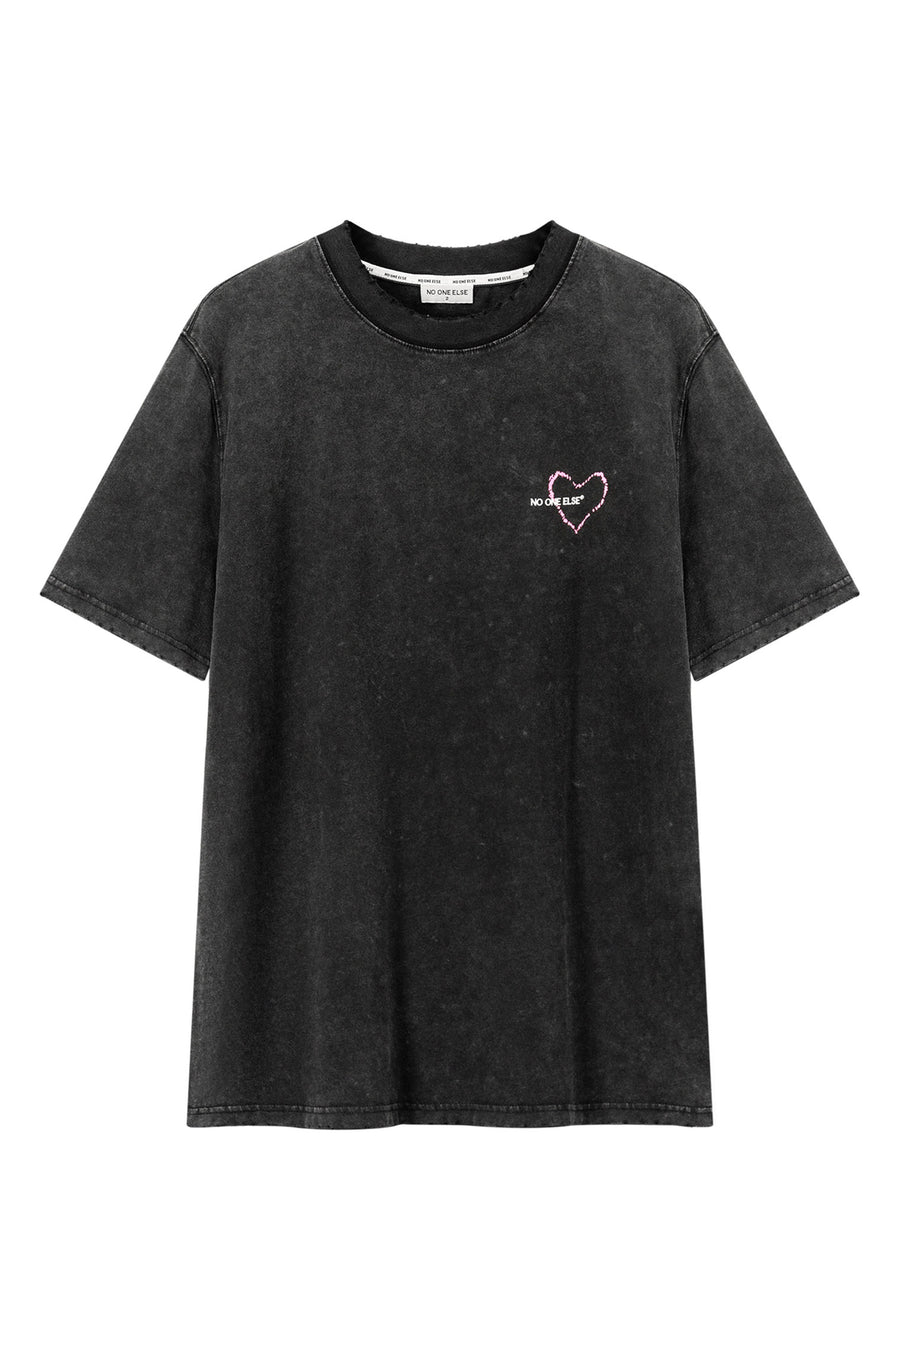 CHUU Heart Loose Fit Basic Short Sleeve T-Shirt